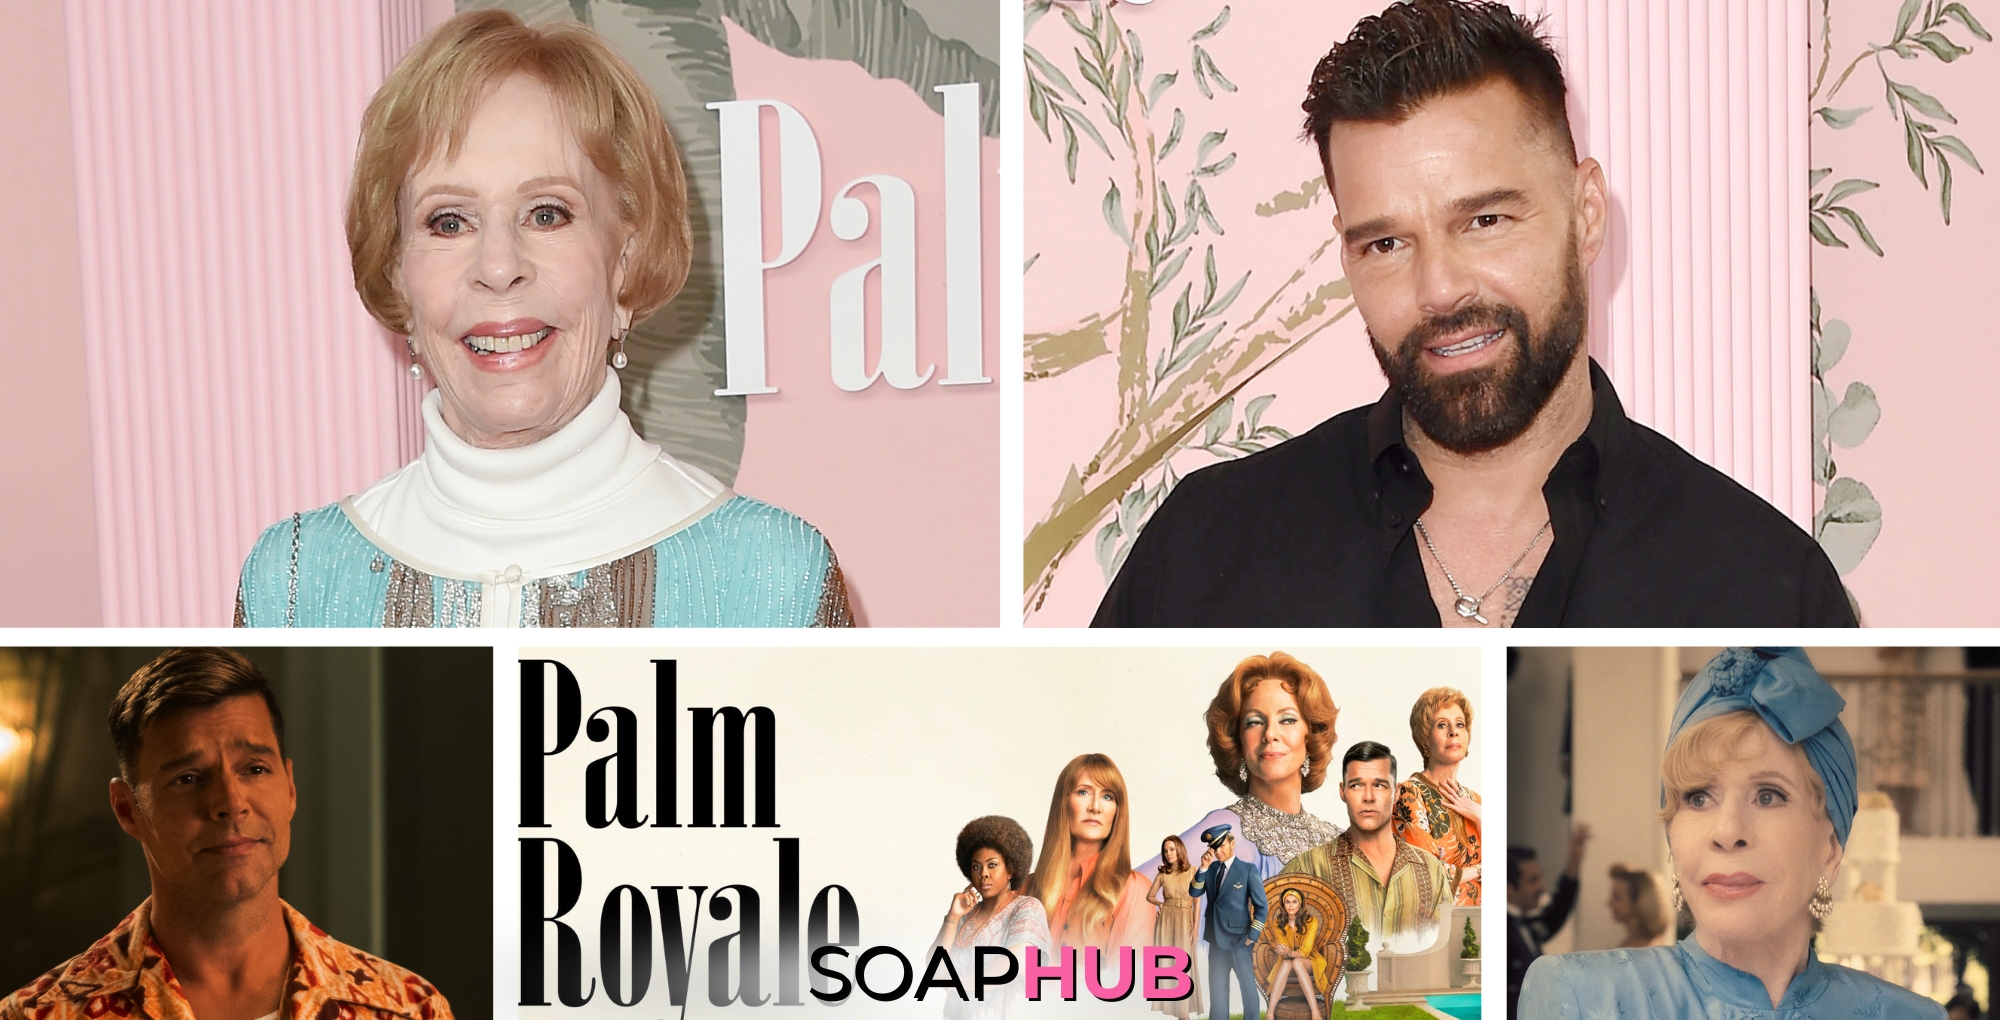 General Hospital alums Ricky Martin and Carol Burnett in Palm Royal with the Soap Hub logo across the bottom.